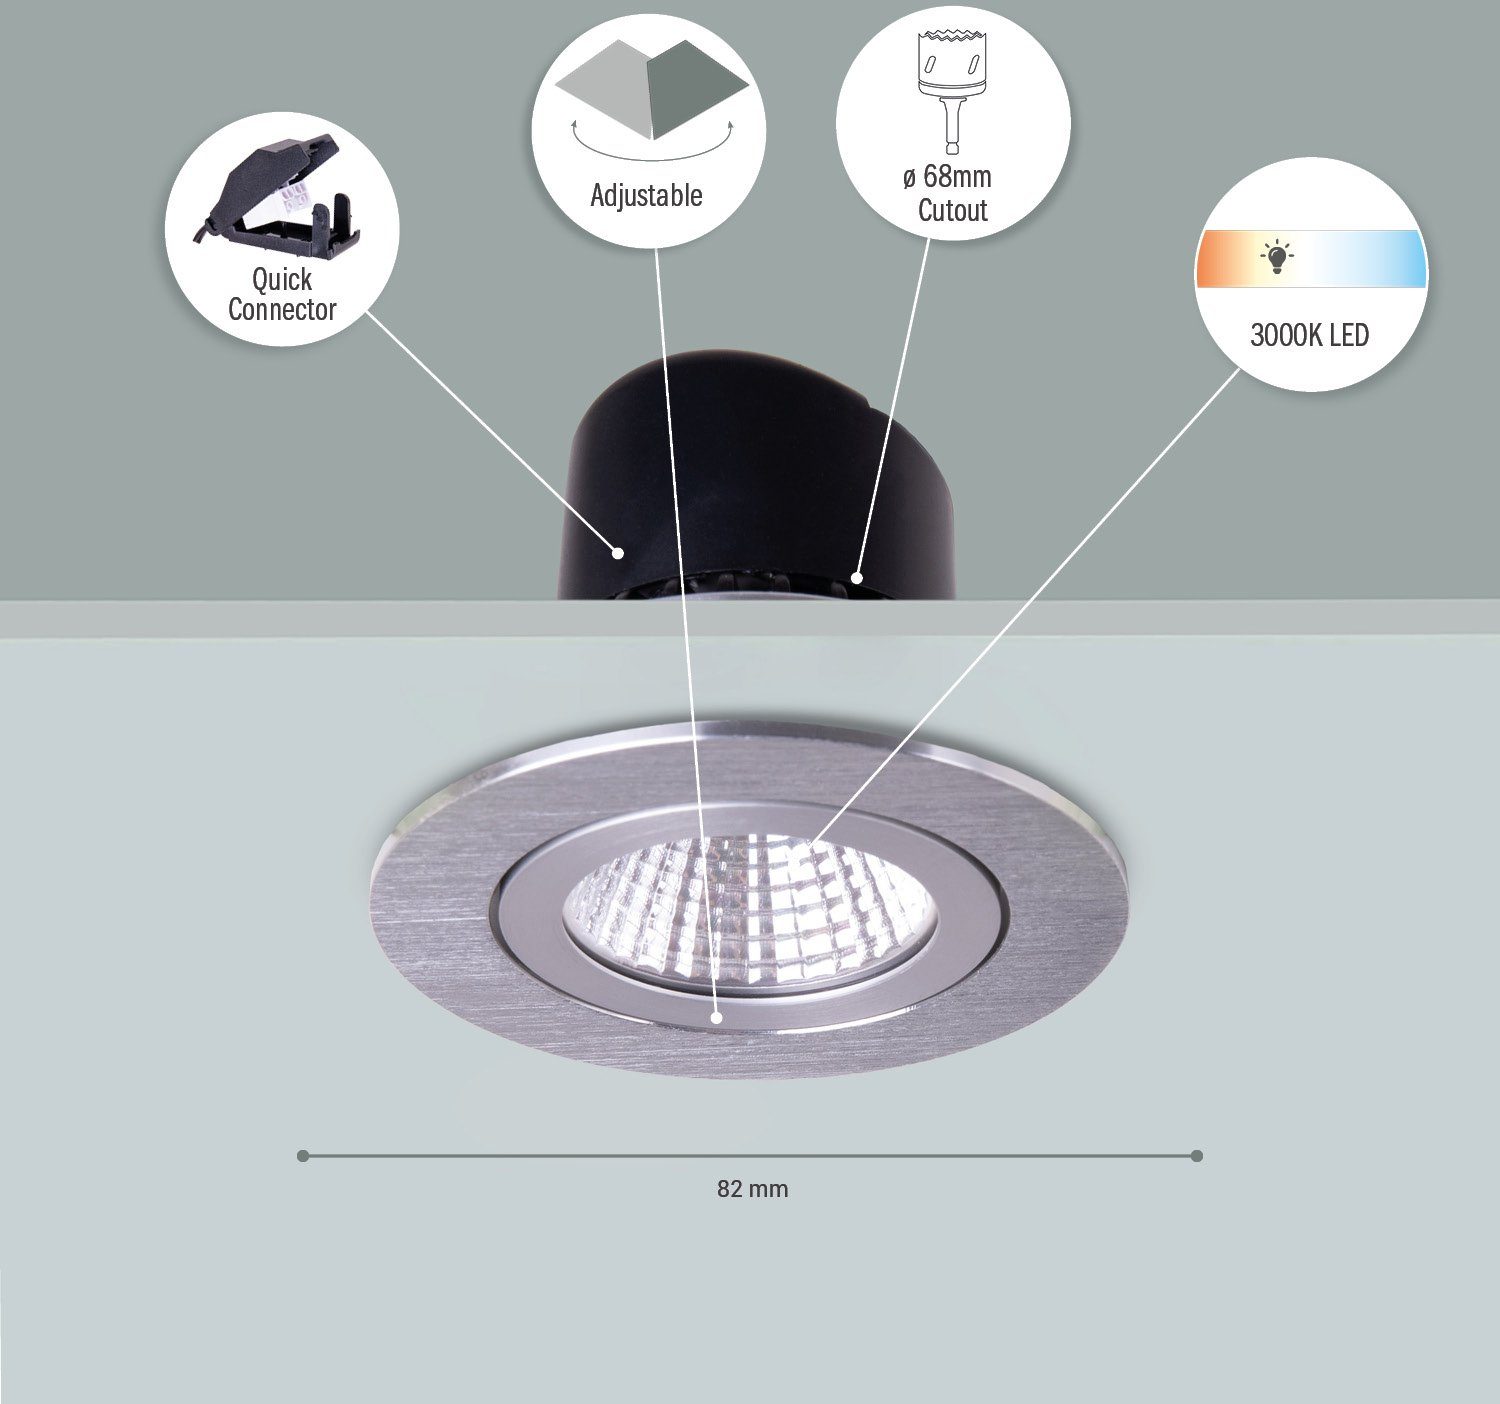 Flach Home Spotlight Einbaustrahler Schwenkbar wechselbar, Strahler Paco Warmweiß, LED LED dimmbar Rita, LED Einbauleuchte